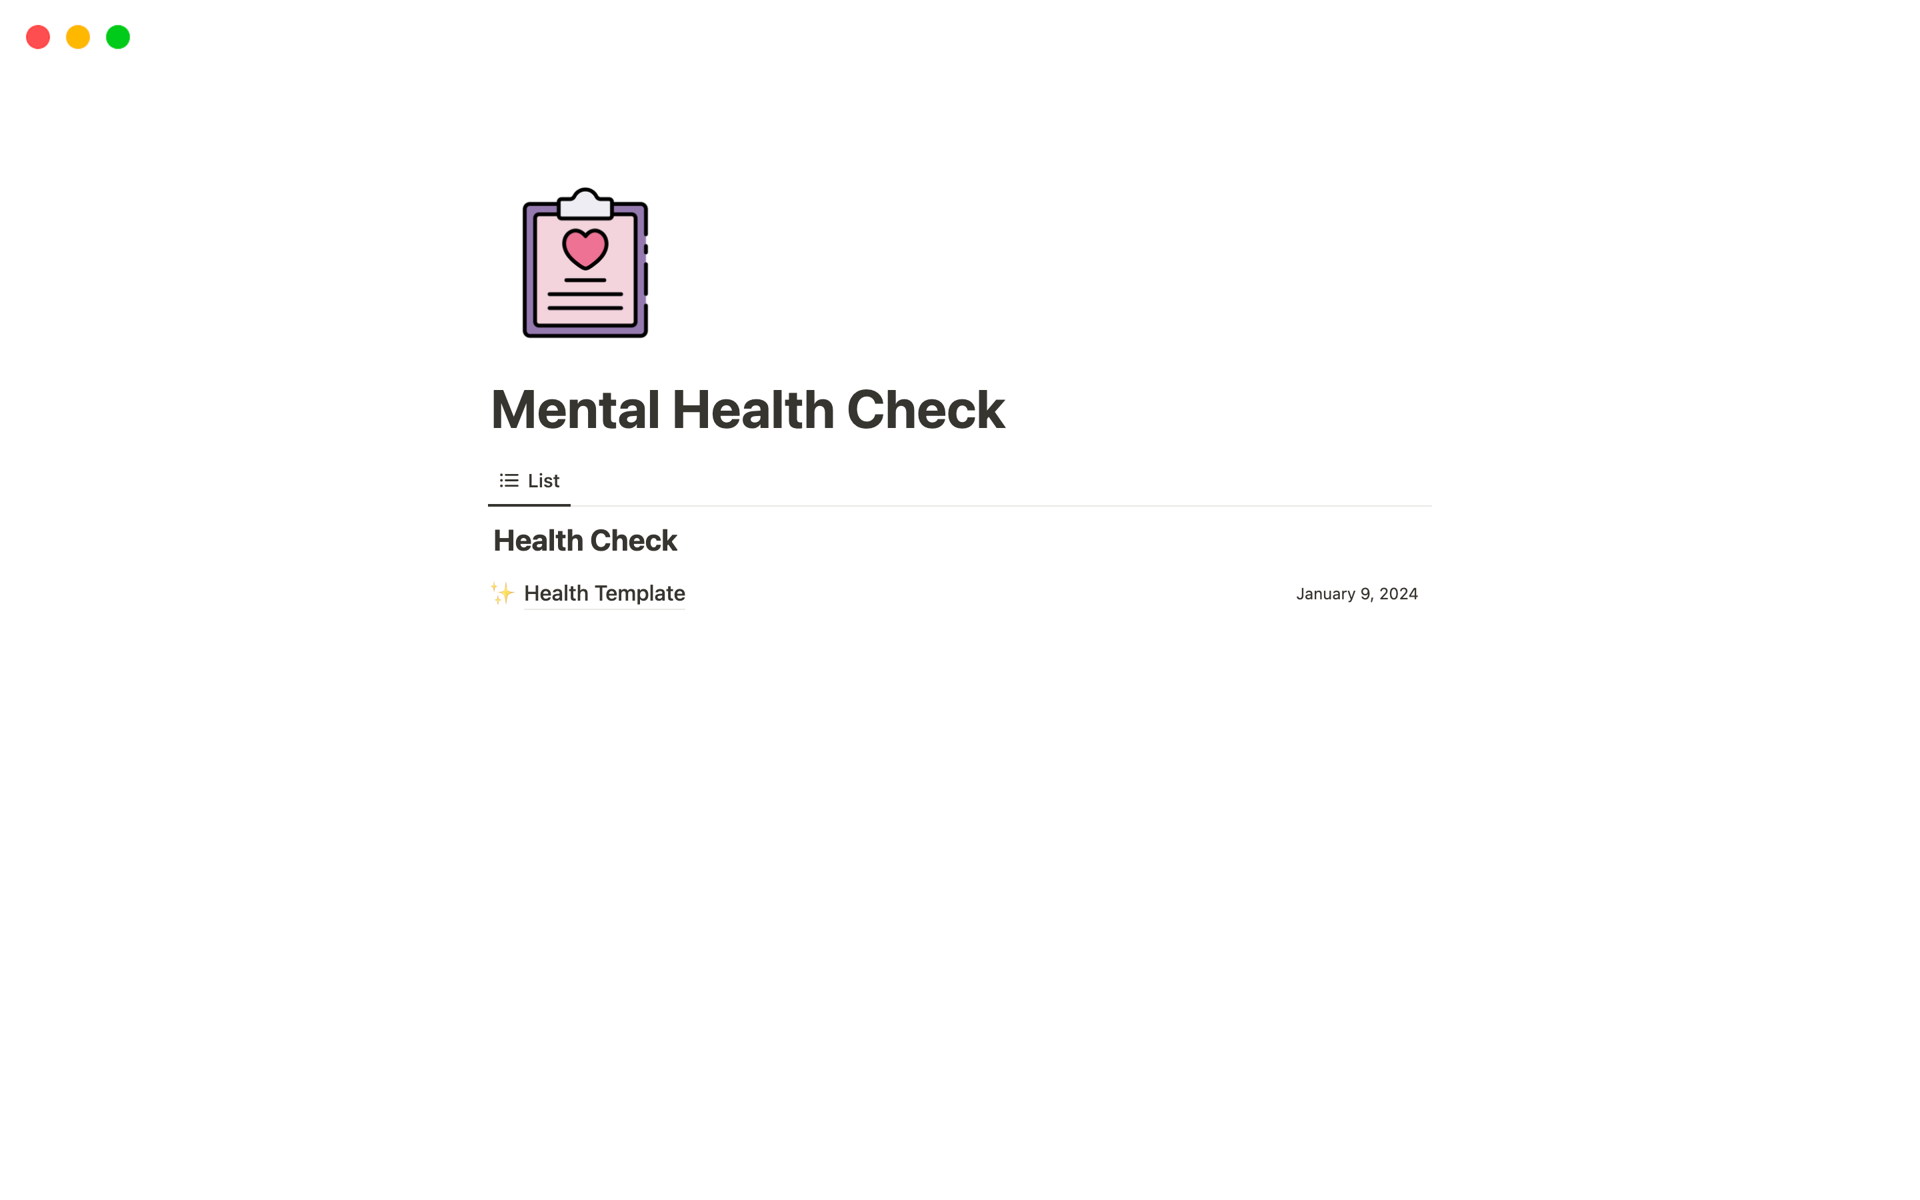 Vista previa de plantilla para Mental Health Check